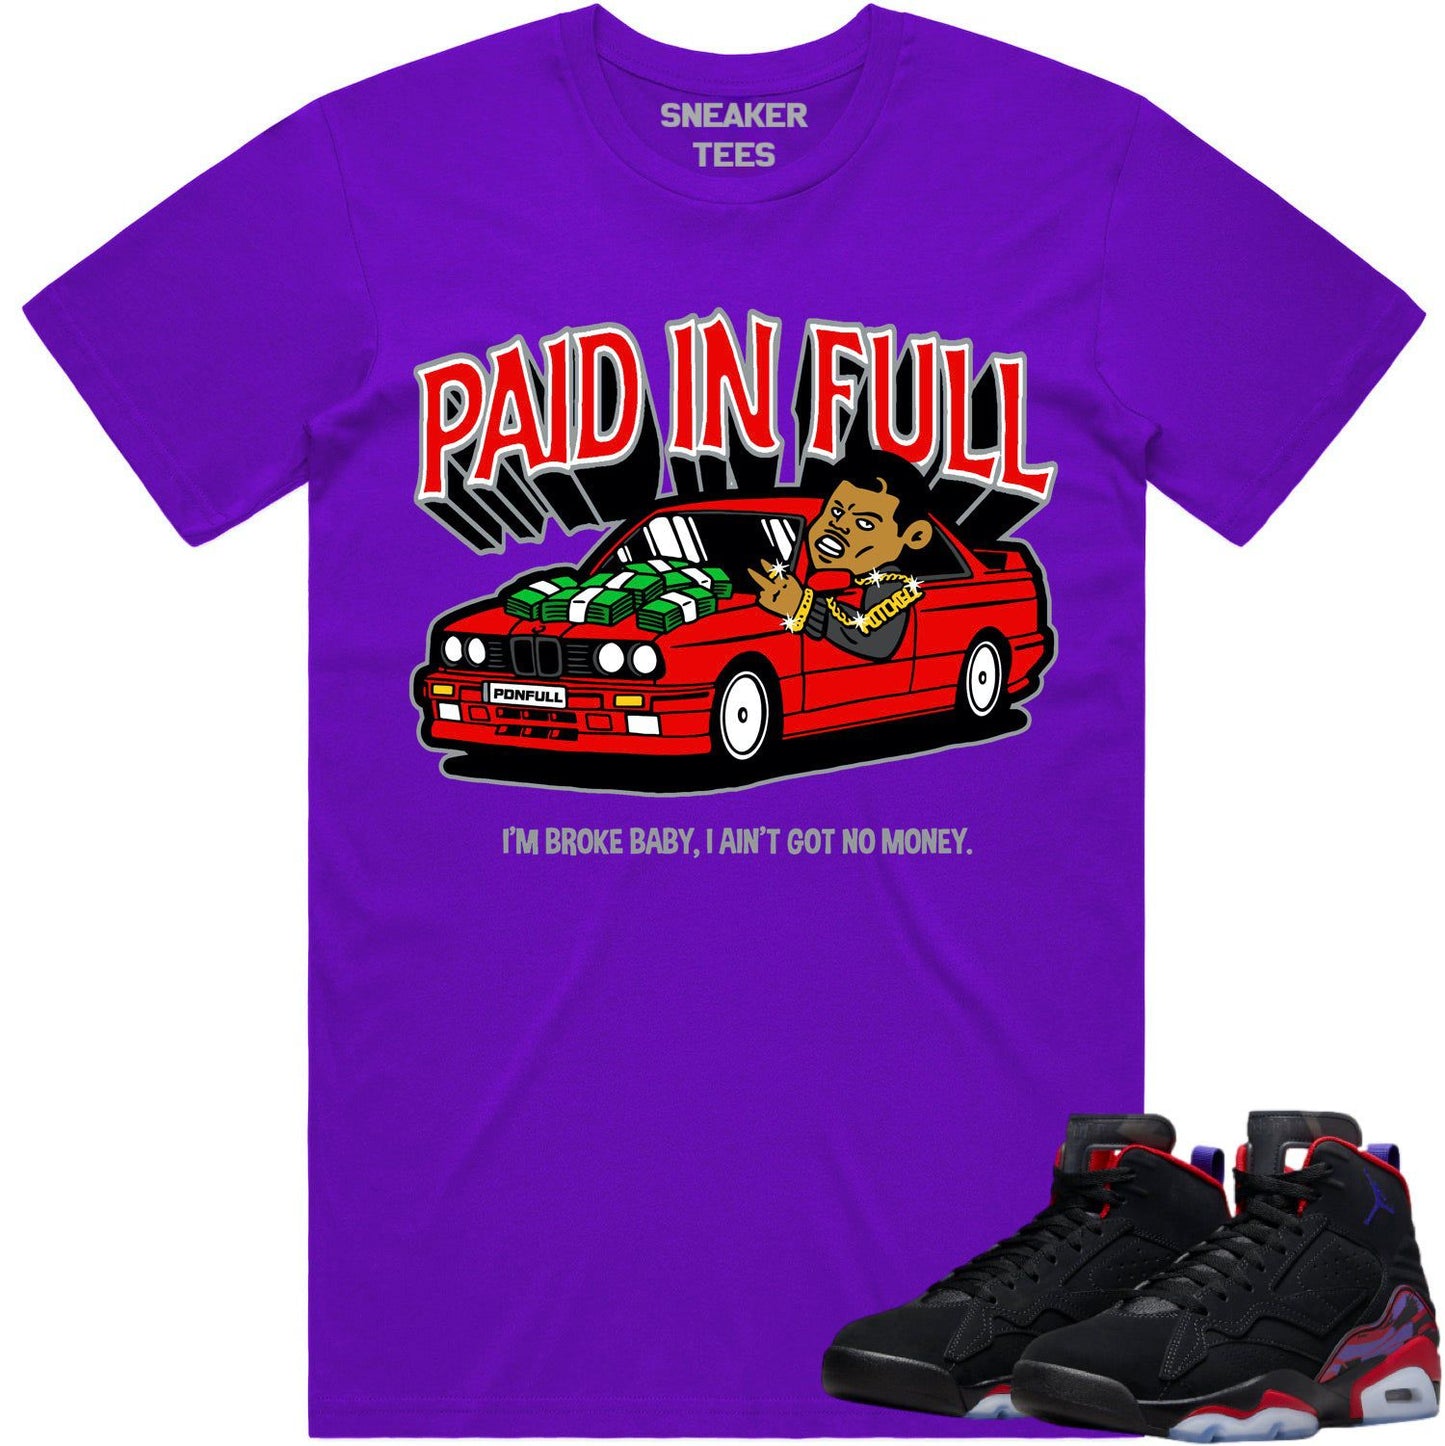 Jordan MVP Raptors Shirt - Sneaker Tees - Red Paid